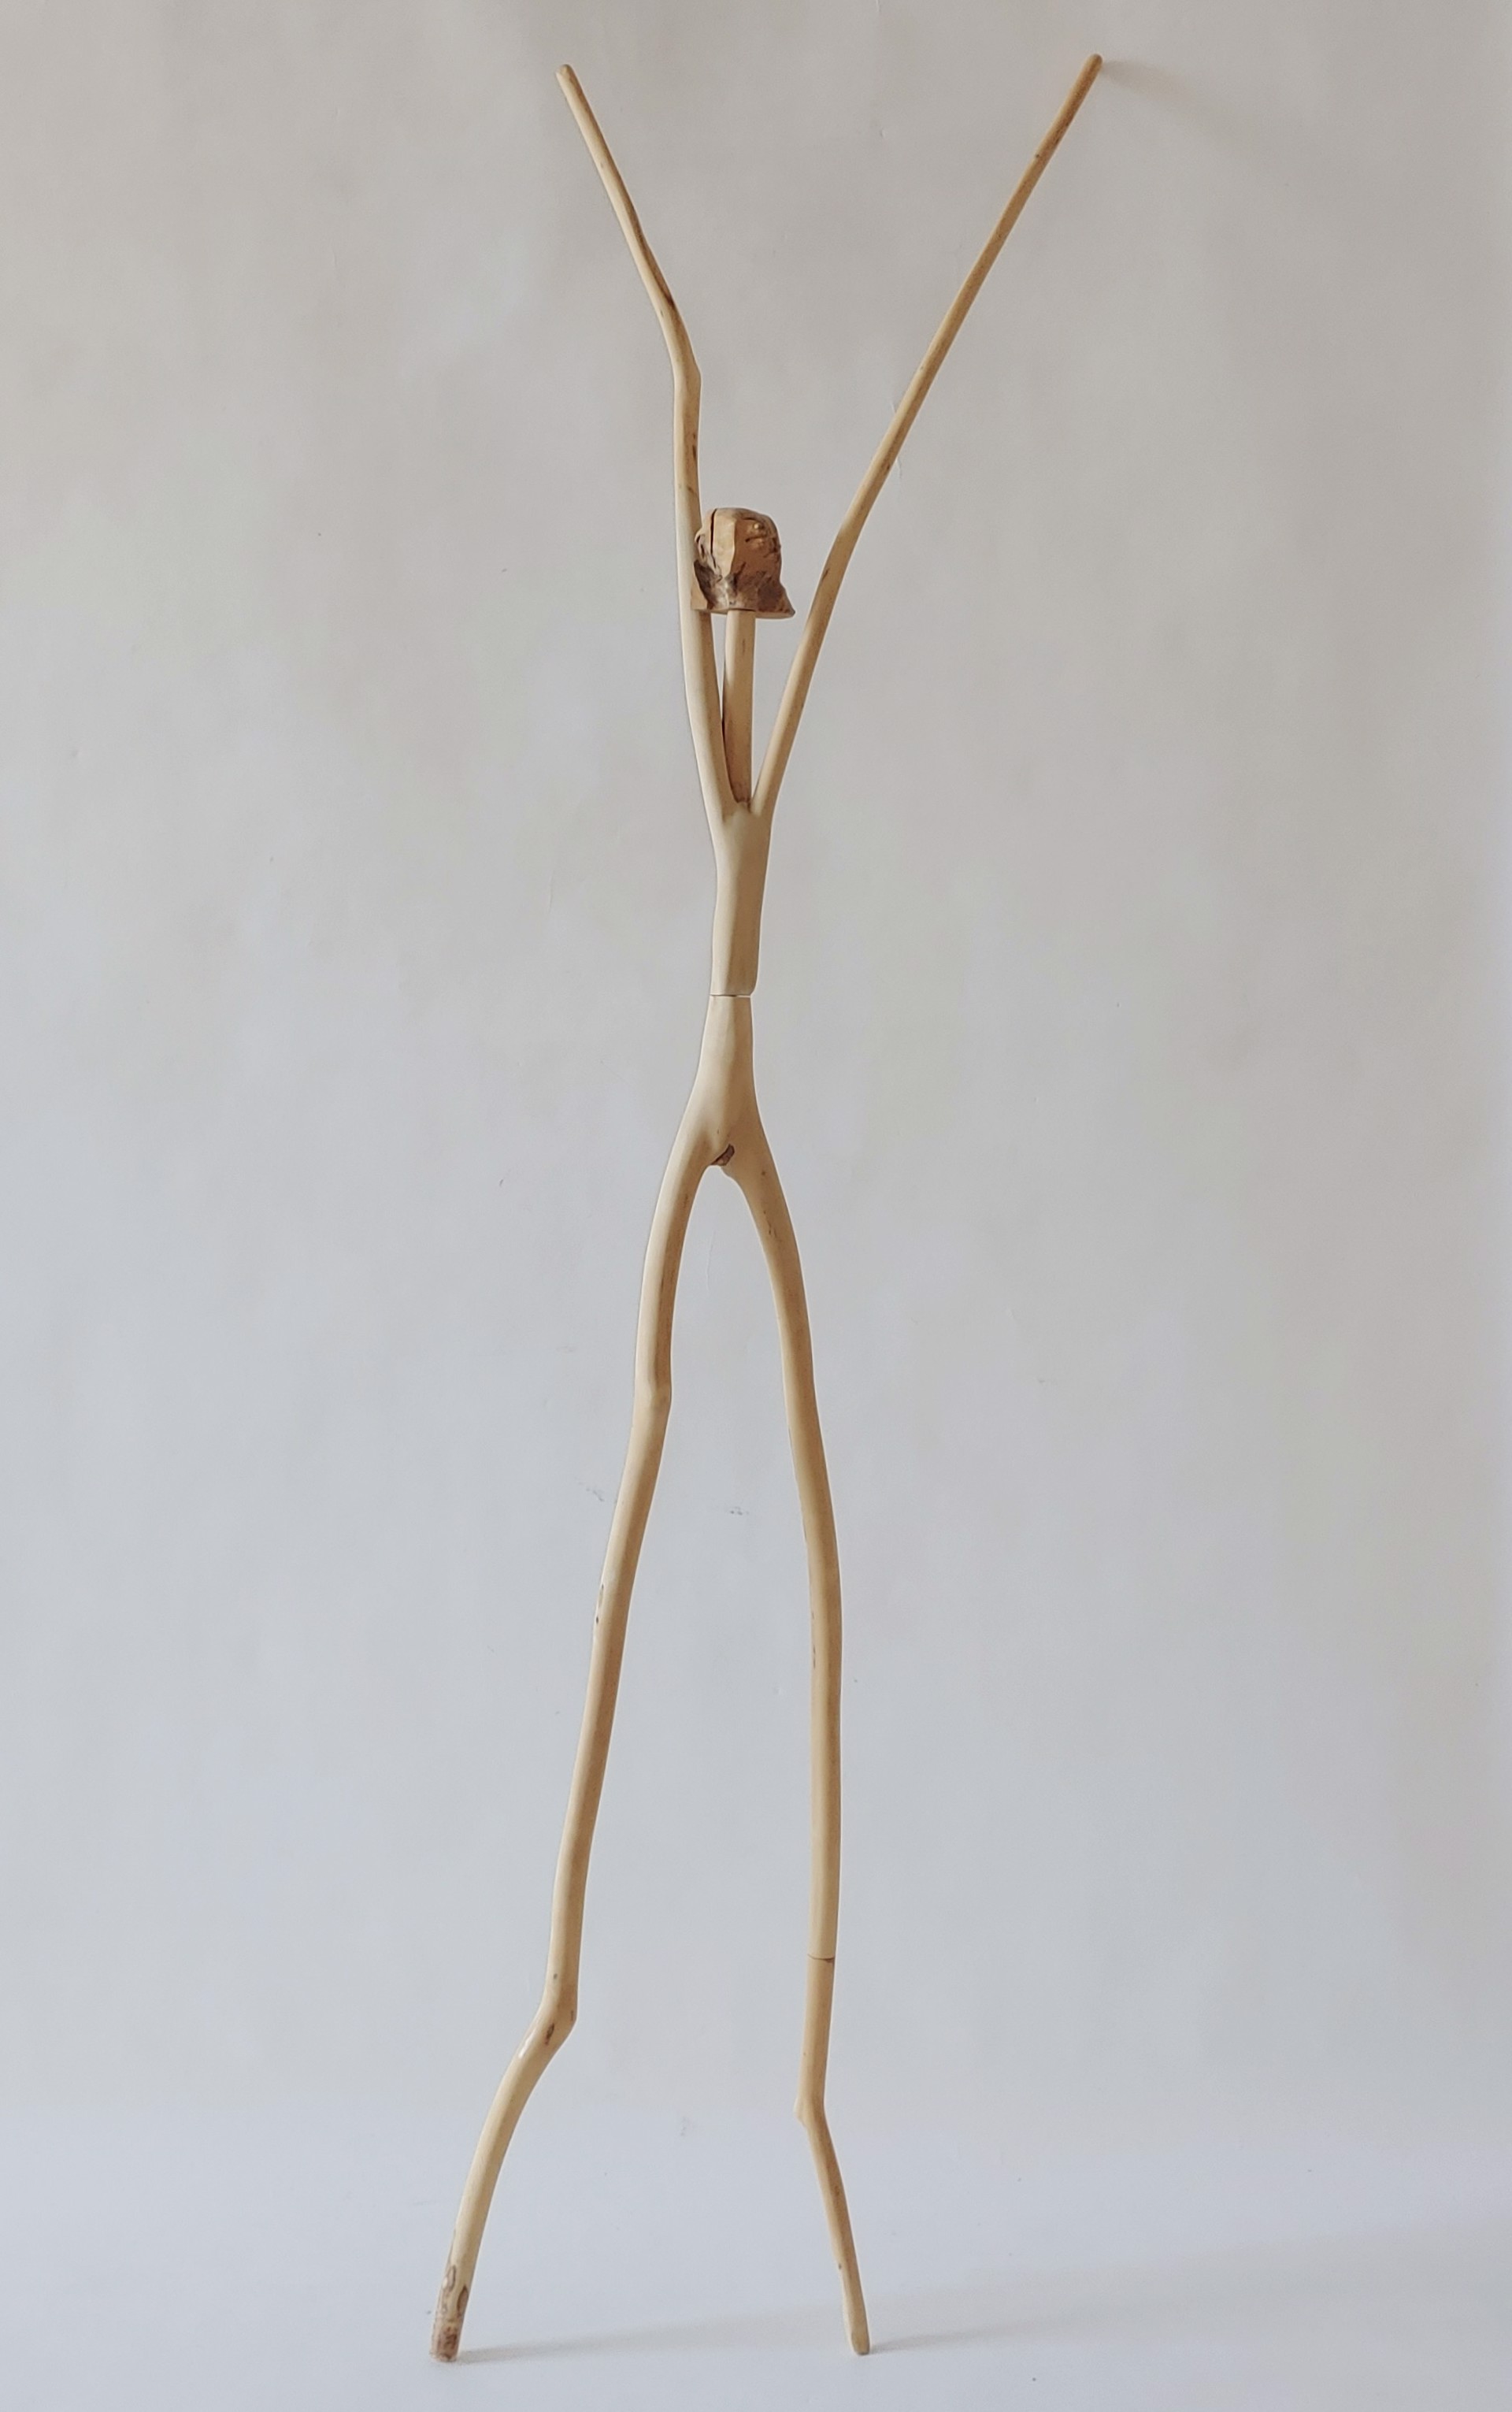 Rejoicer #2 - Wood Sculpture by David Amdur